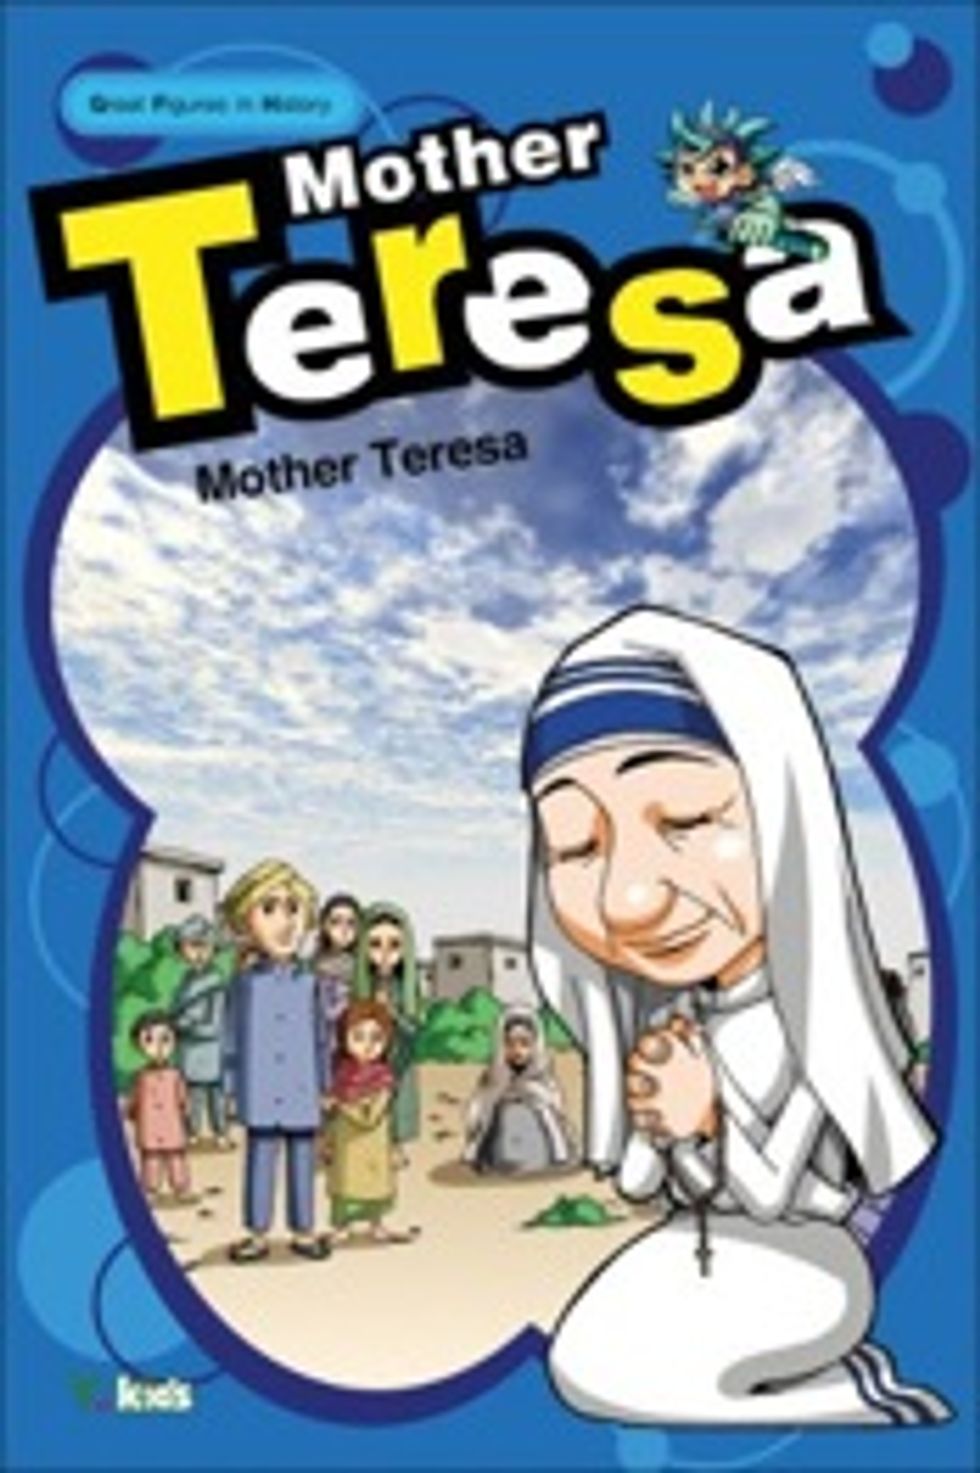 Cindy McCain's Mother Teresa Story Is Crap, Too